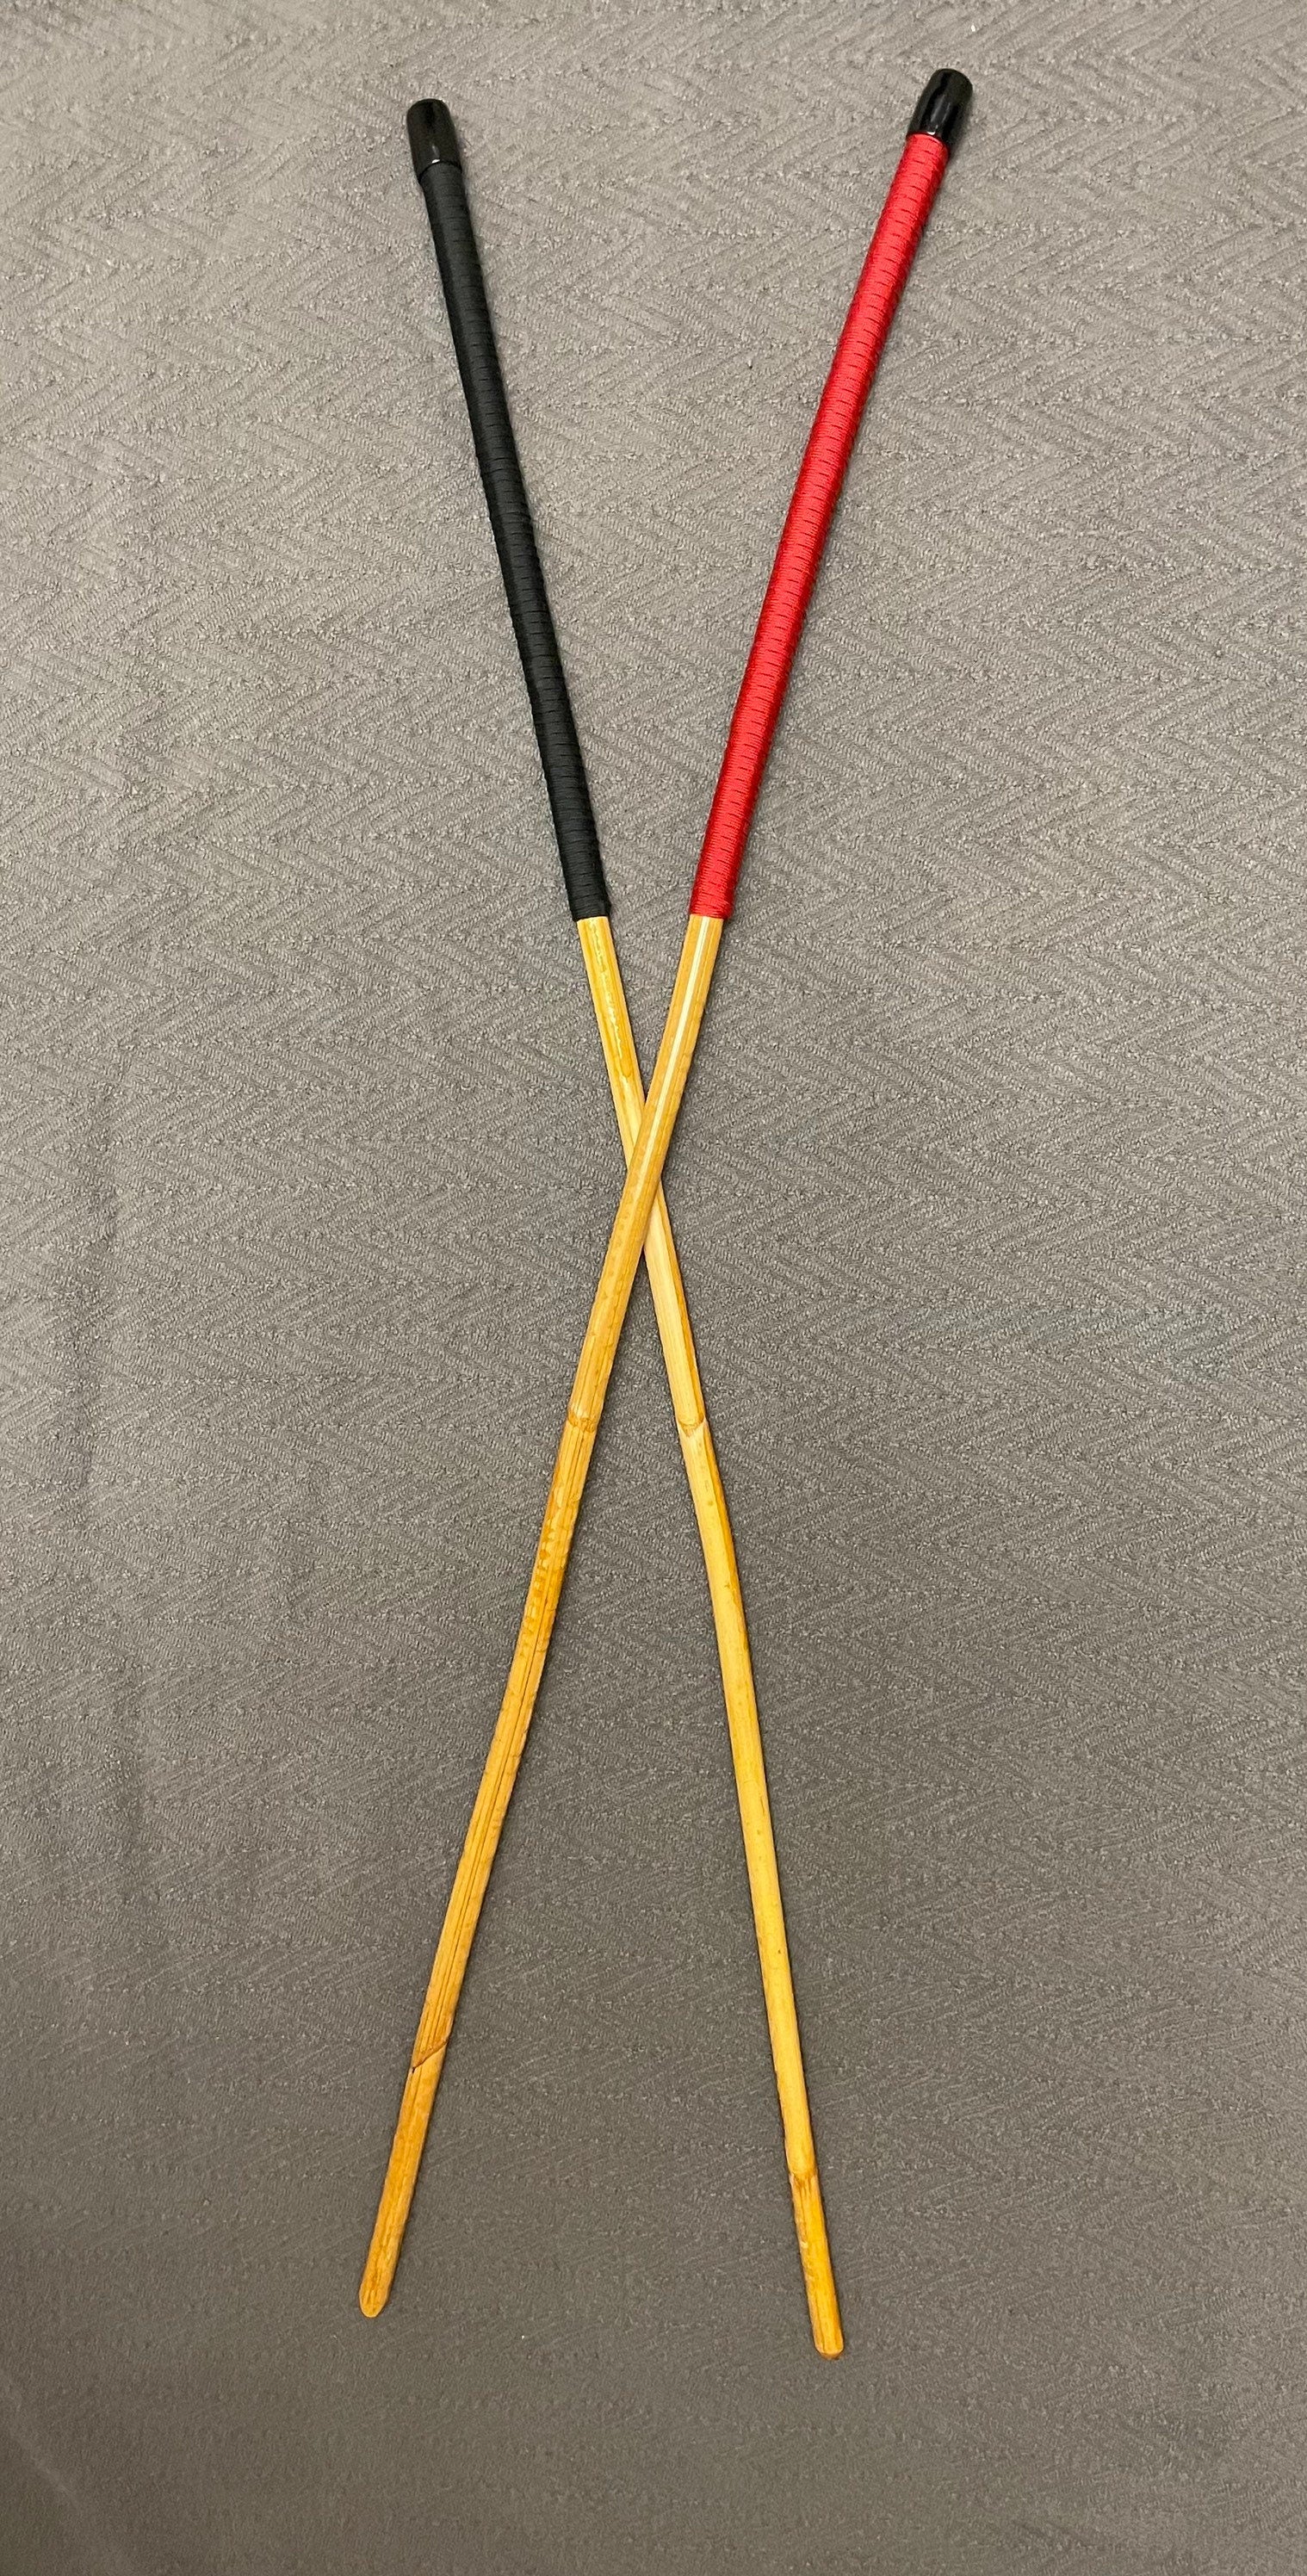 Reformatory Wardress / Eton Premium Kooboo Rattan Punishment Canes - 85 to 90 cms Length - Black or Red Paracord Handles